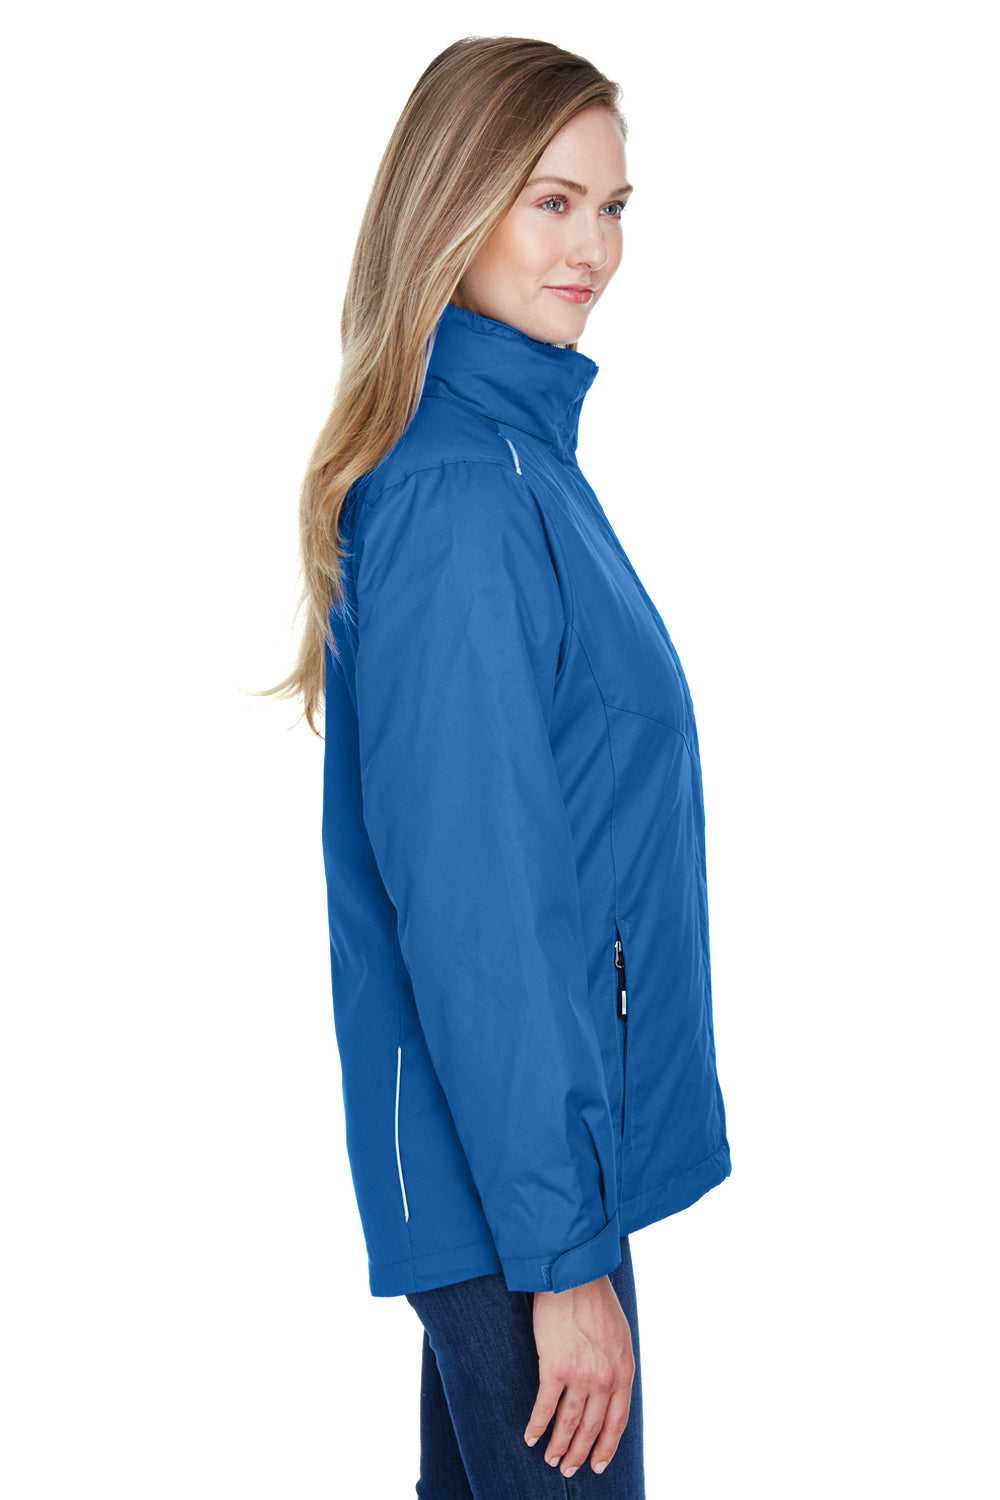 Core 365 78205 Womens Region 3-in-1 Water Resistant Full Zip Hooded Jacket Royal Blue Side